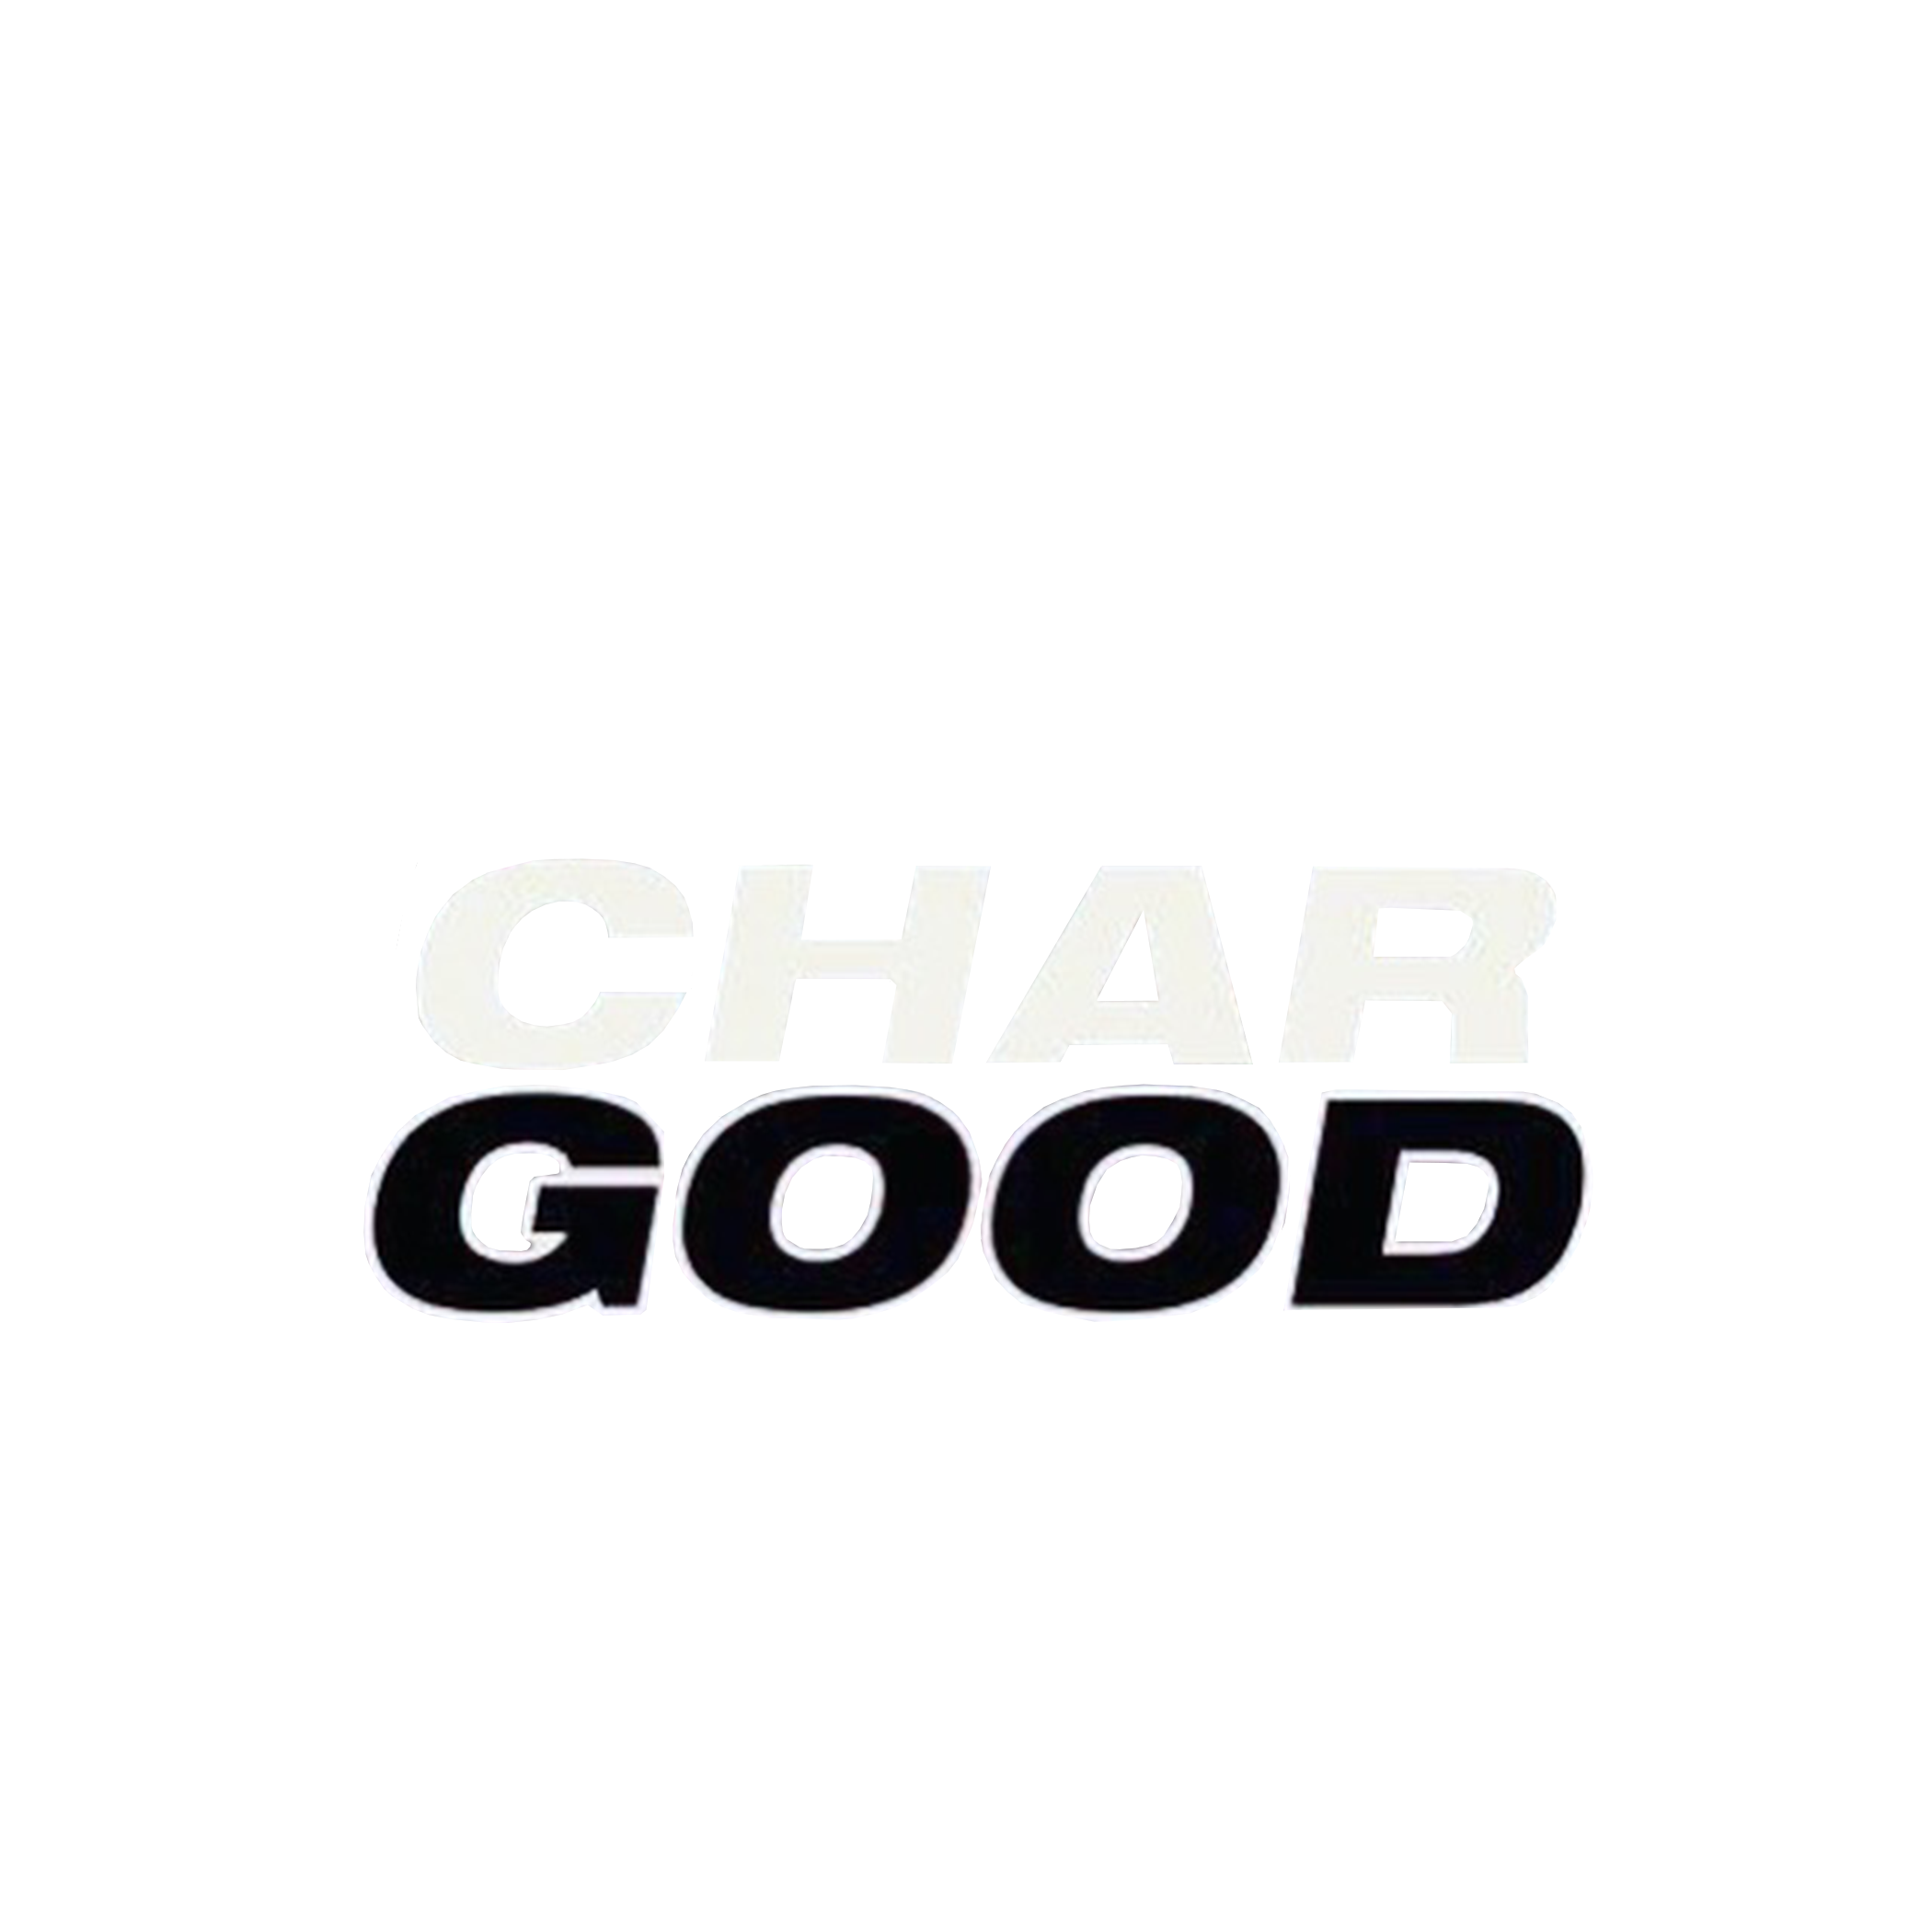 Char Good